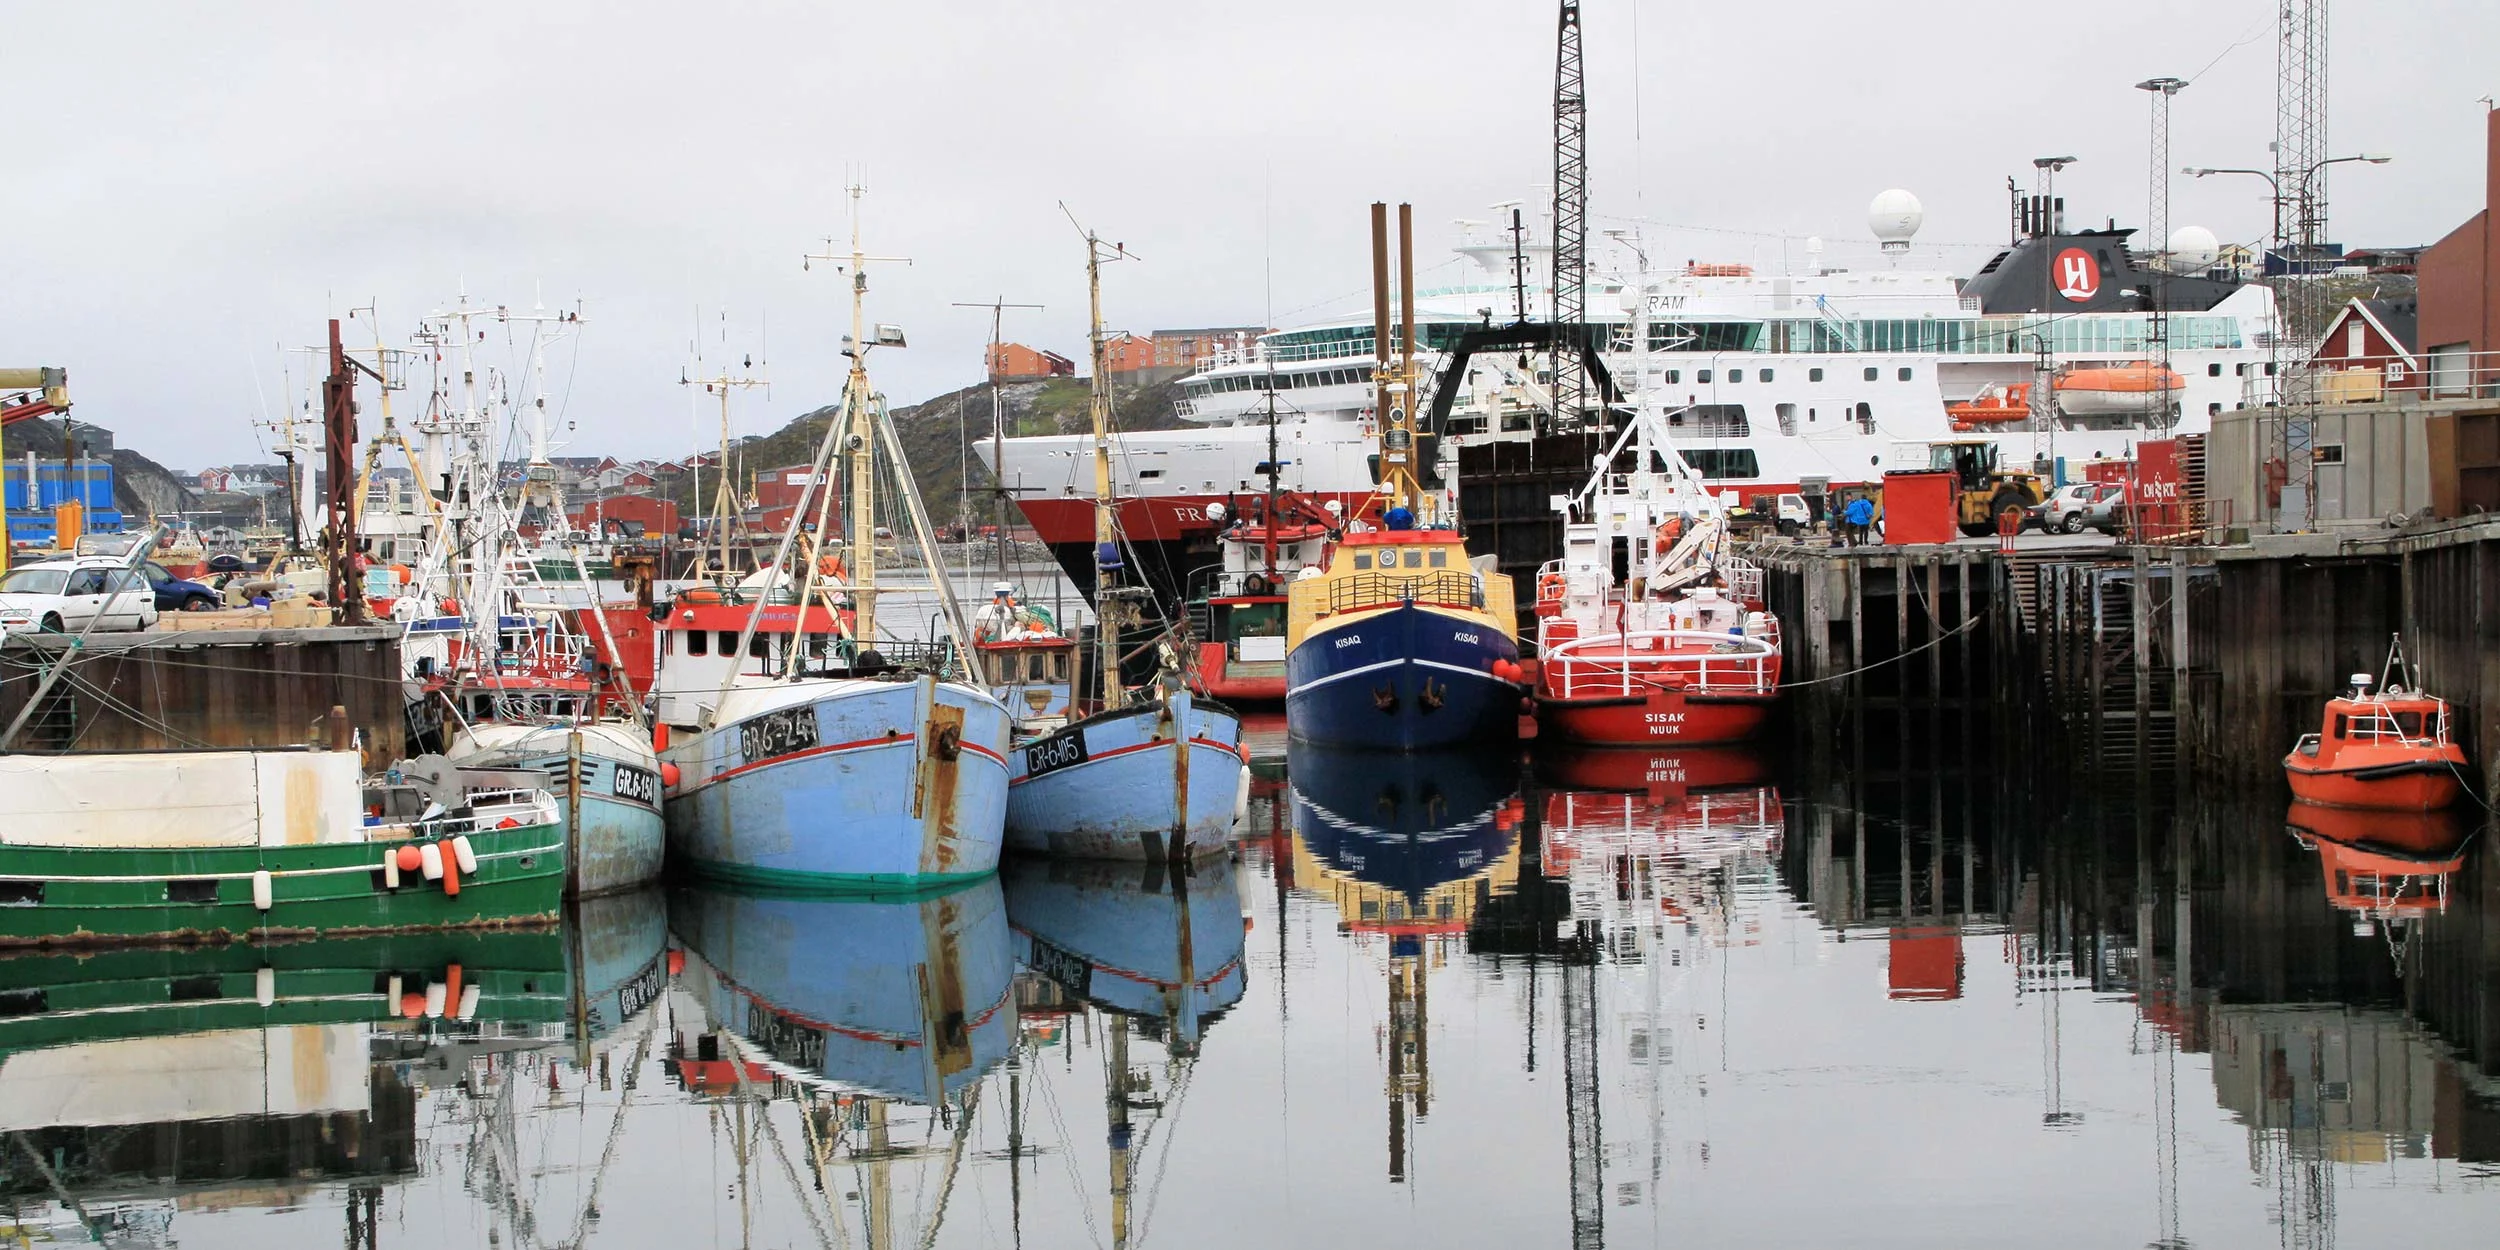 2500x1250_img_7909-ms-fram-nuuk-harbor-fishing-boats_leslie-a.-kelly.jpg